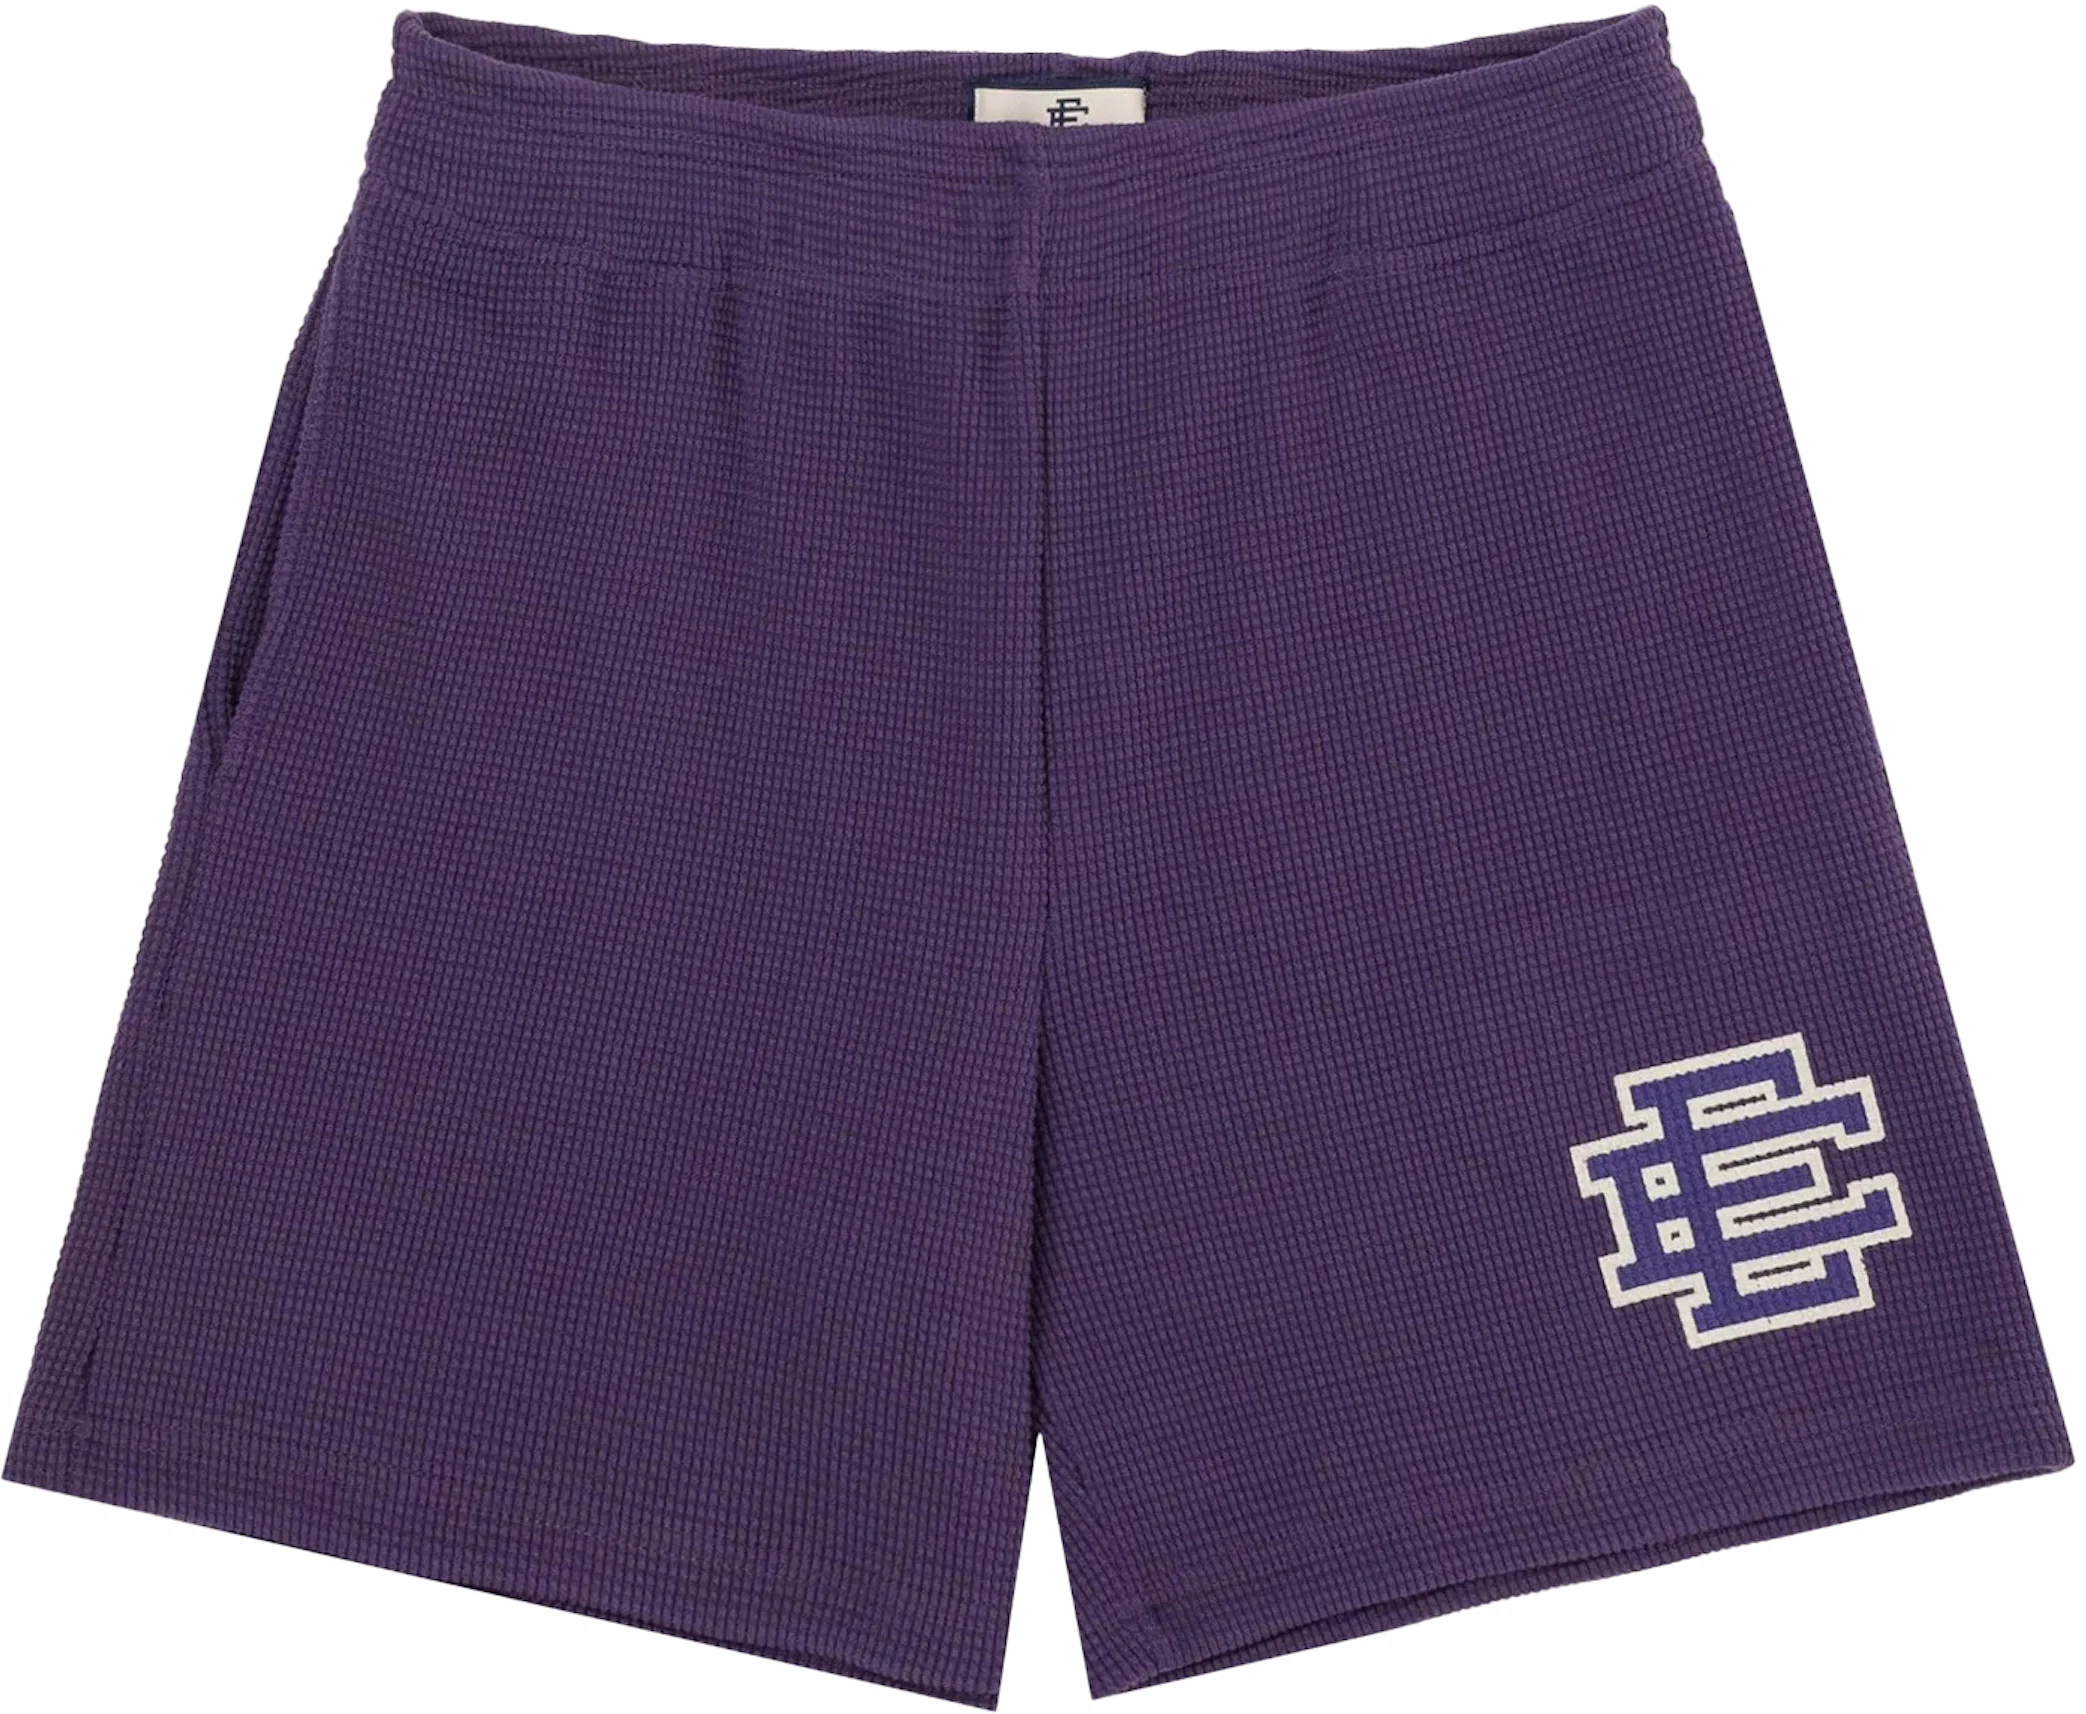 Aurola shorts Purple Size M - $11 (63% Off Retail) - From